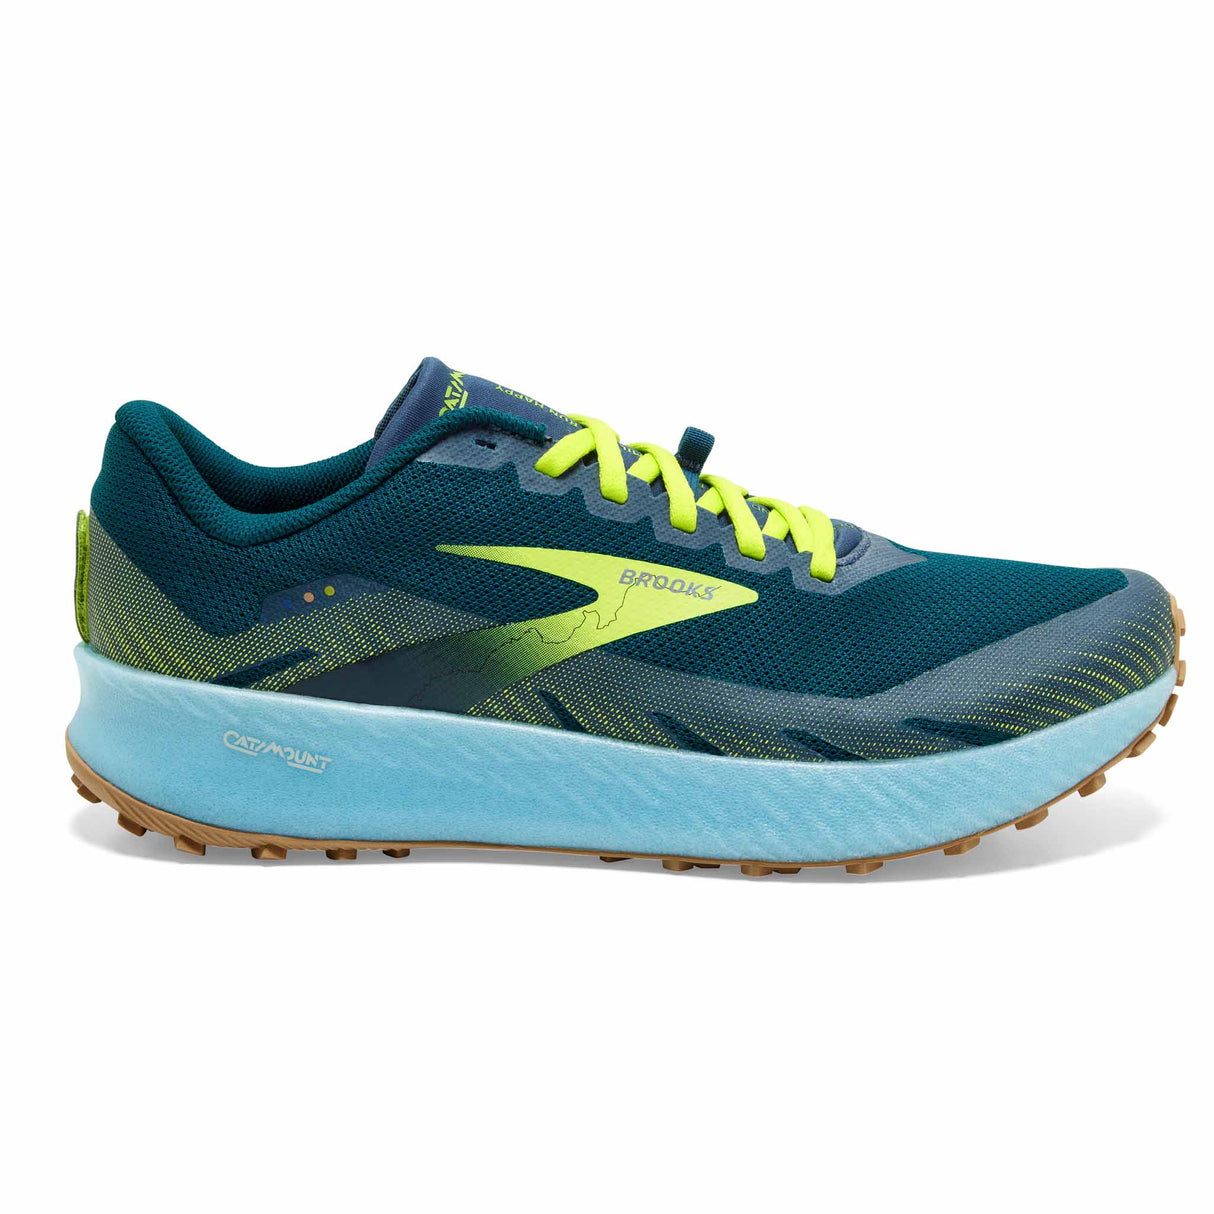 Brooks Catamount chaussures de course à pied trail homme - Blue / Lime / Biscuit